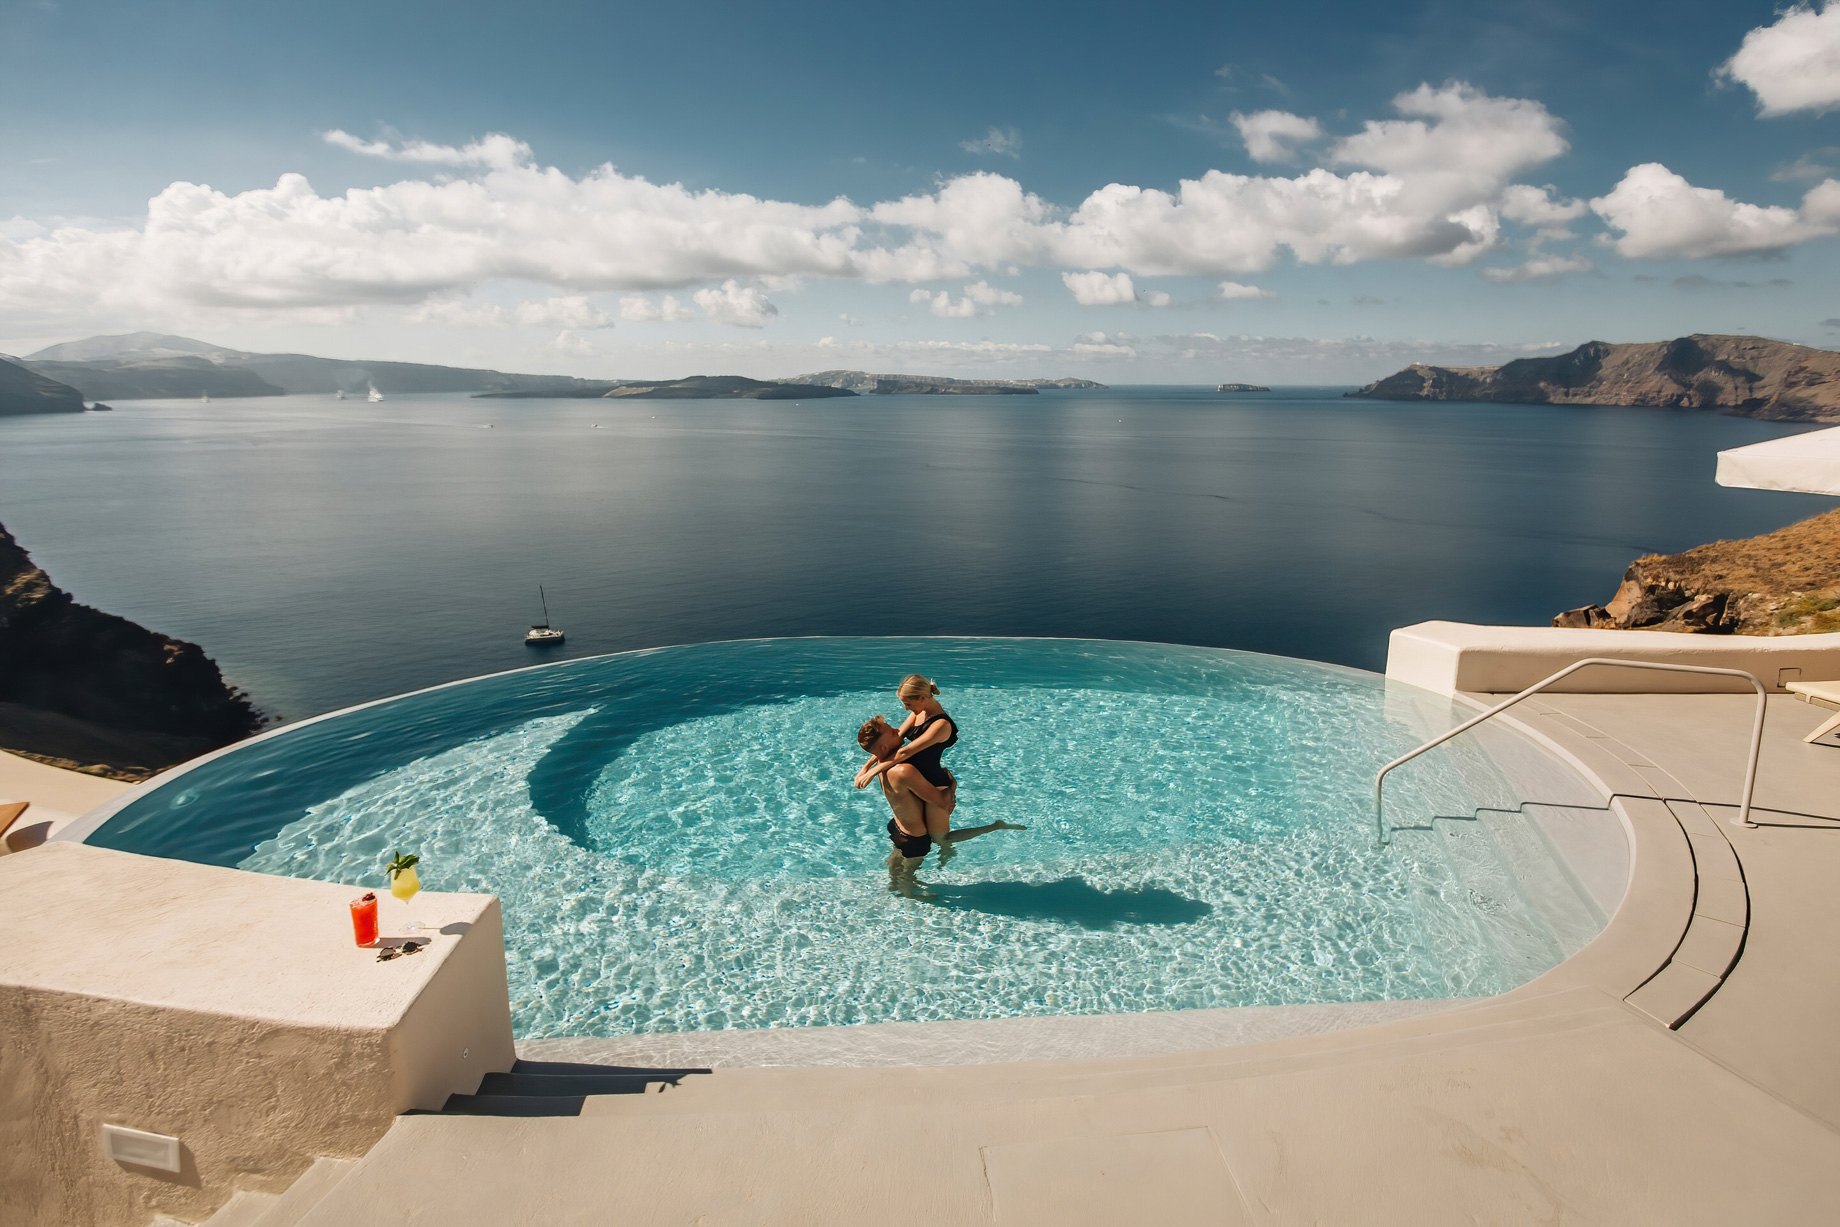 Mystique Hotel Santorini – Oia, Santorini Island, Greece - Main Infinity Pool